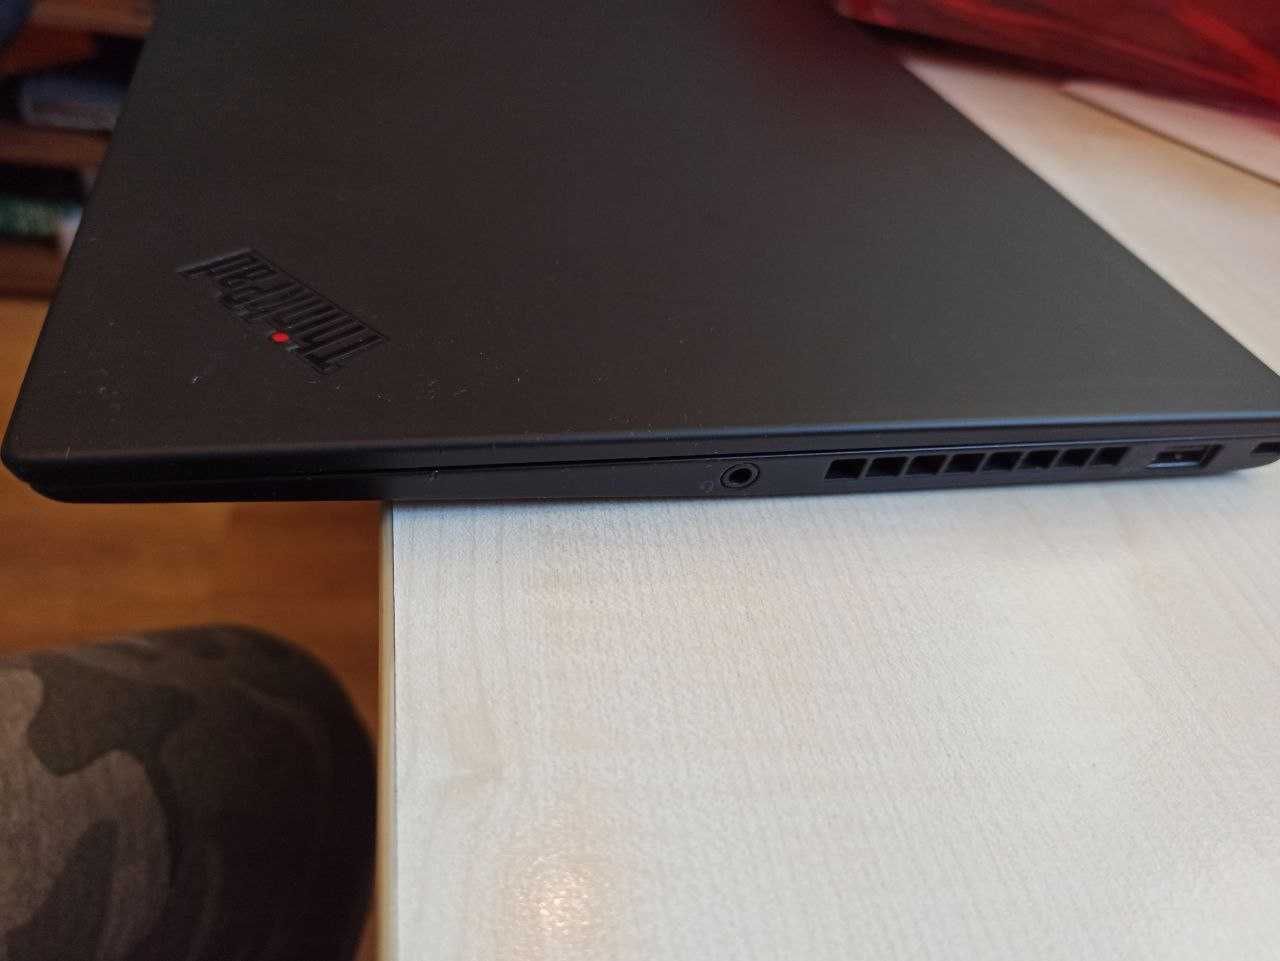 LENOVO ThinkPad X1 CARBON 6TH GEN i7-8550U 512GB NVME 8GB Touchscreen!